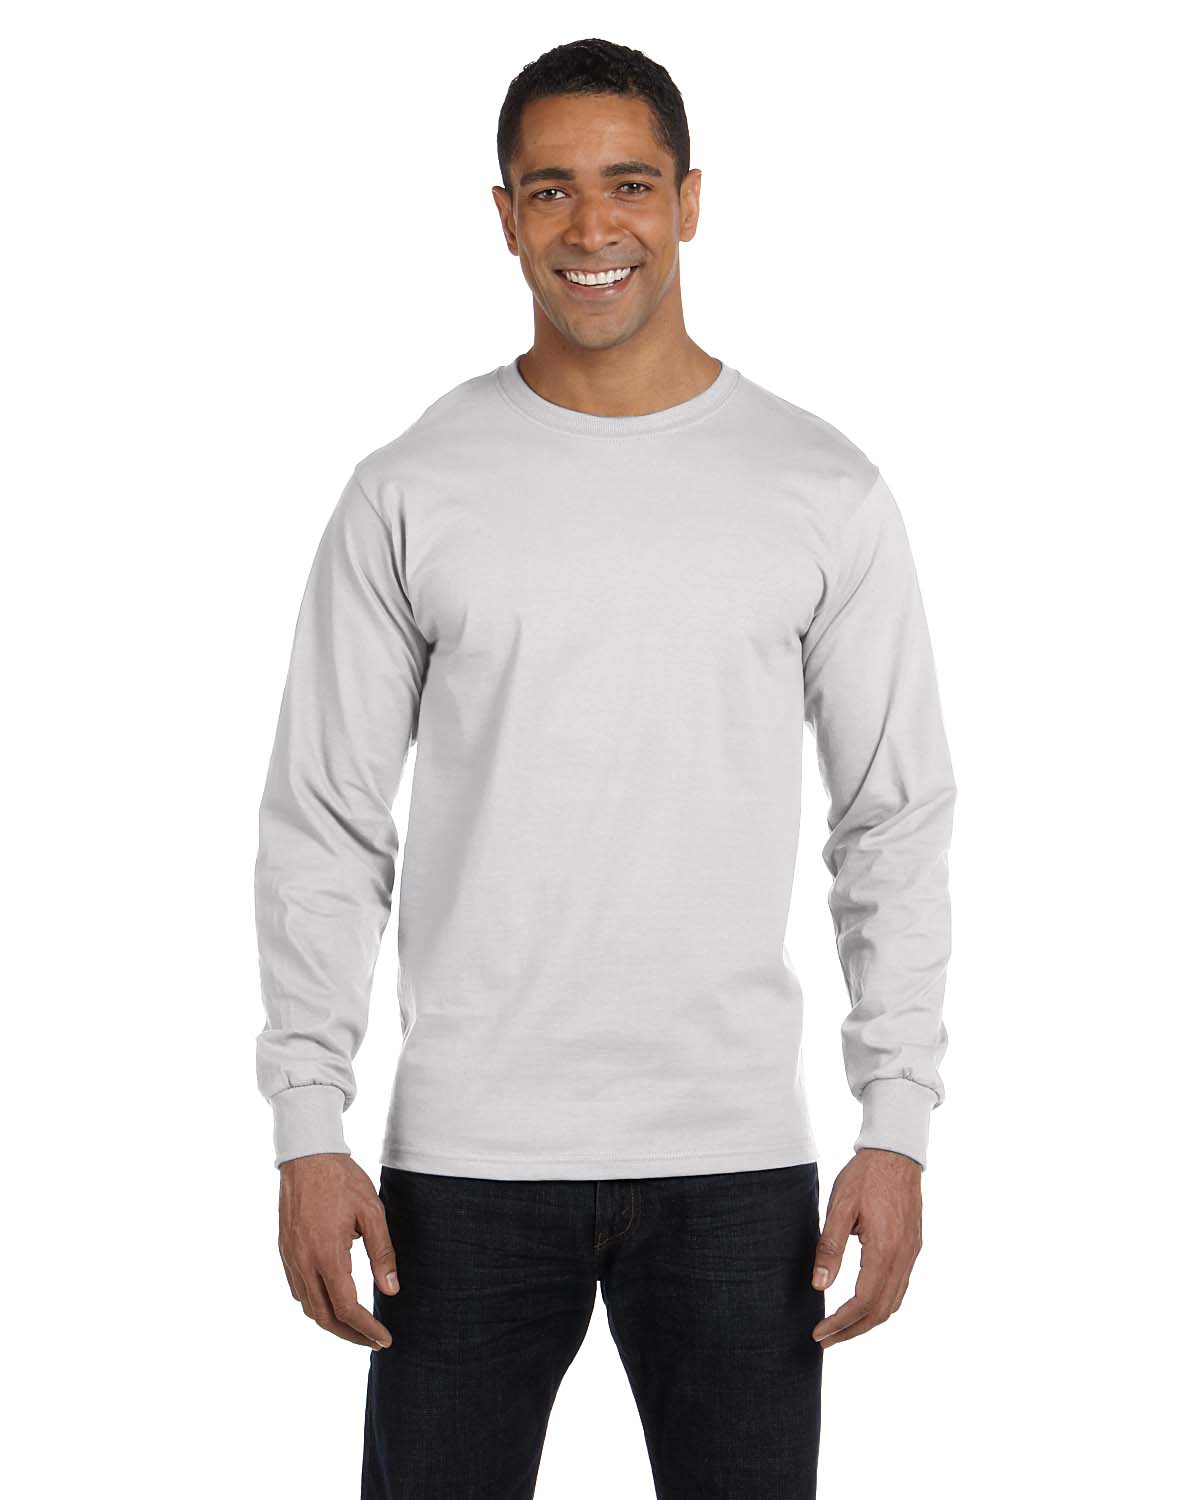 Long Sleeve Beefy-T 100% Ringspun Cotton 5186 T-Shirt S-3XL Hanes Adult 6.1 oz